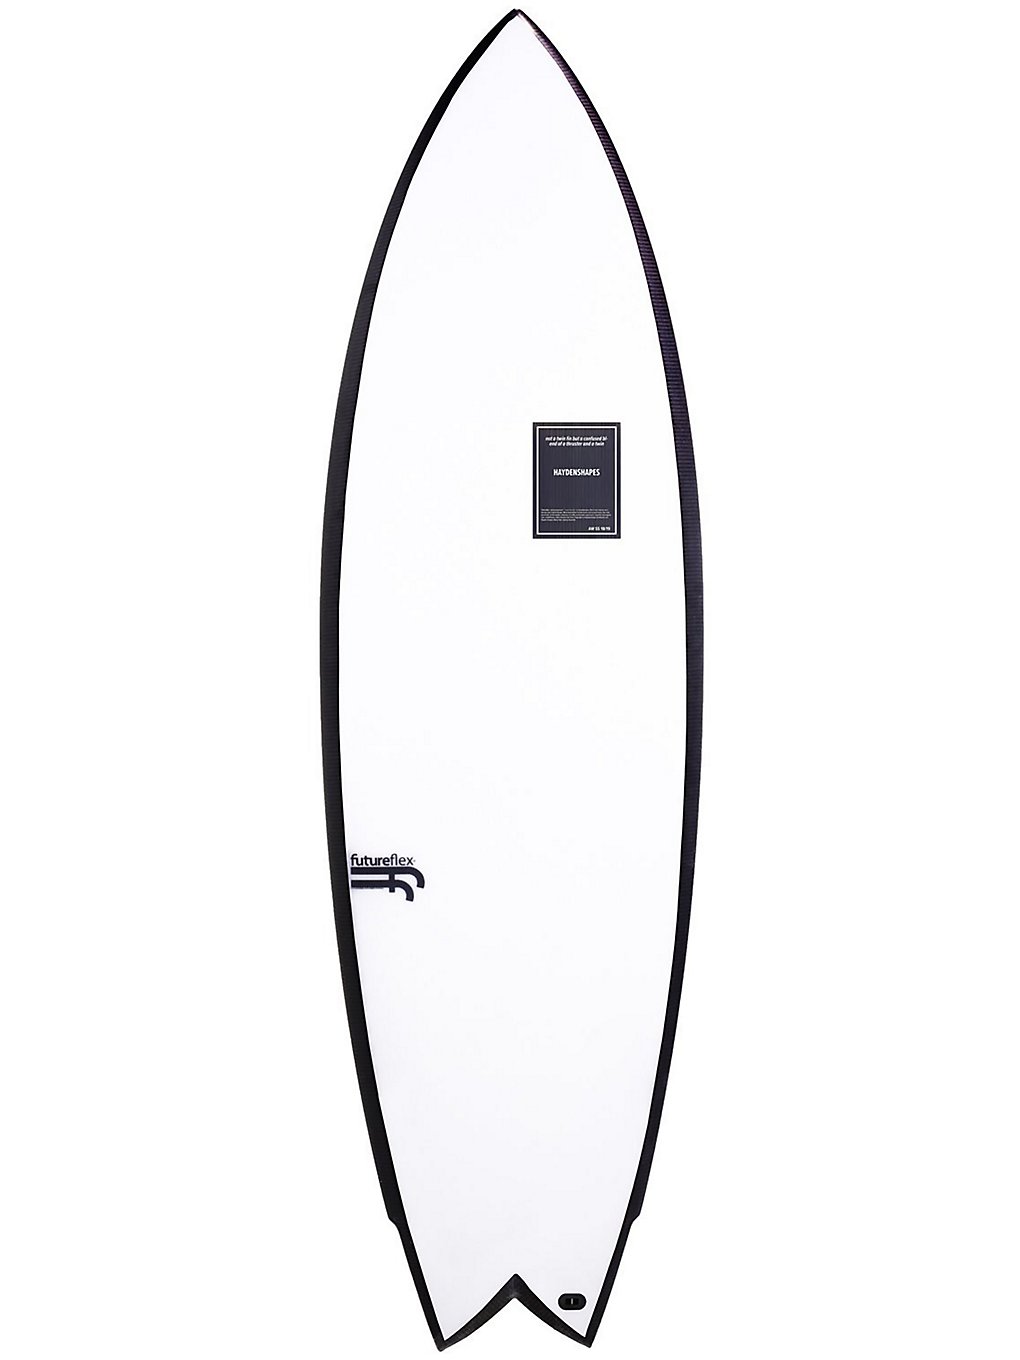 Haydenshapes Misc Future Flex Futures 5'6 Surfboard model logo